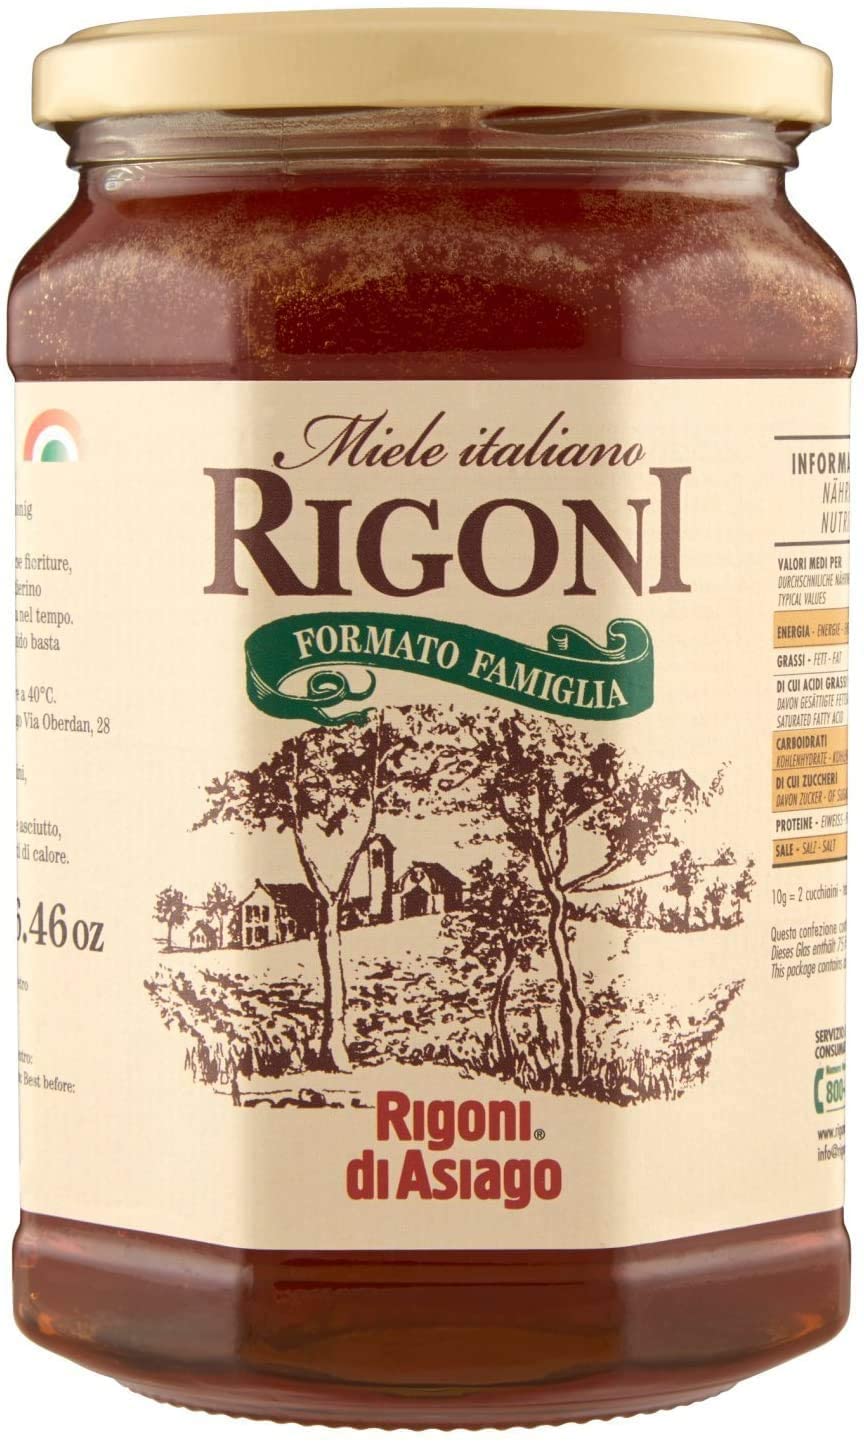 3x Rigoni di Asiago Miele Italiano Formato Famiglia Honig Familienformat Einmachglas 750g 100% Italienisches Produkt Italienische Imkers Bienenstockprodukte